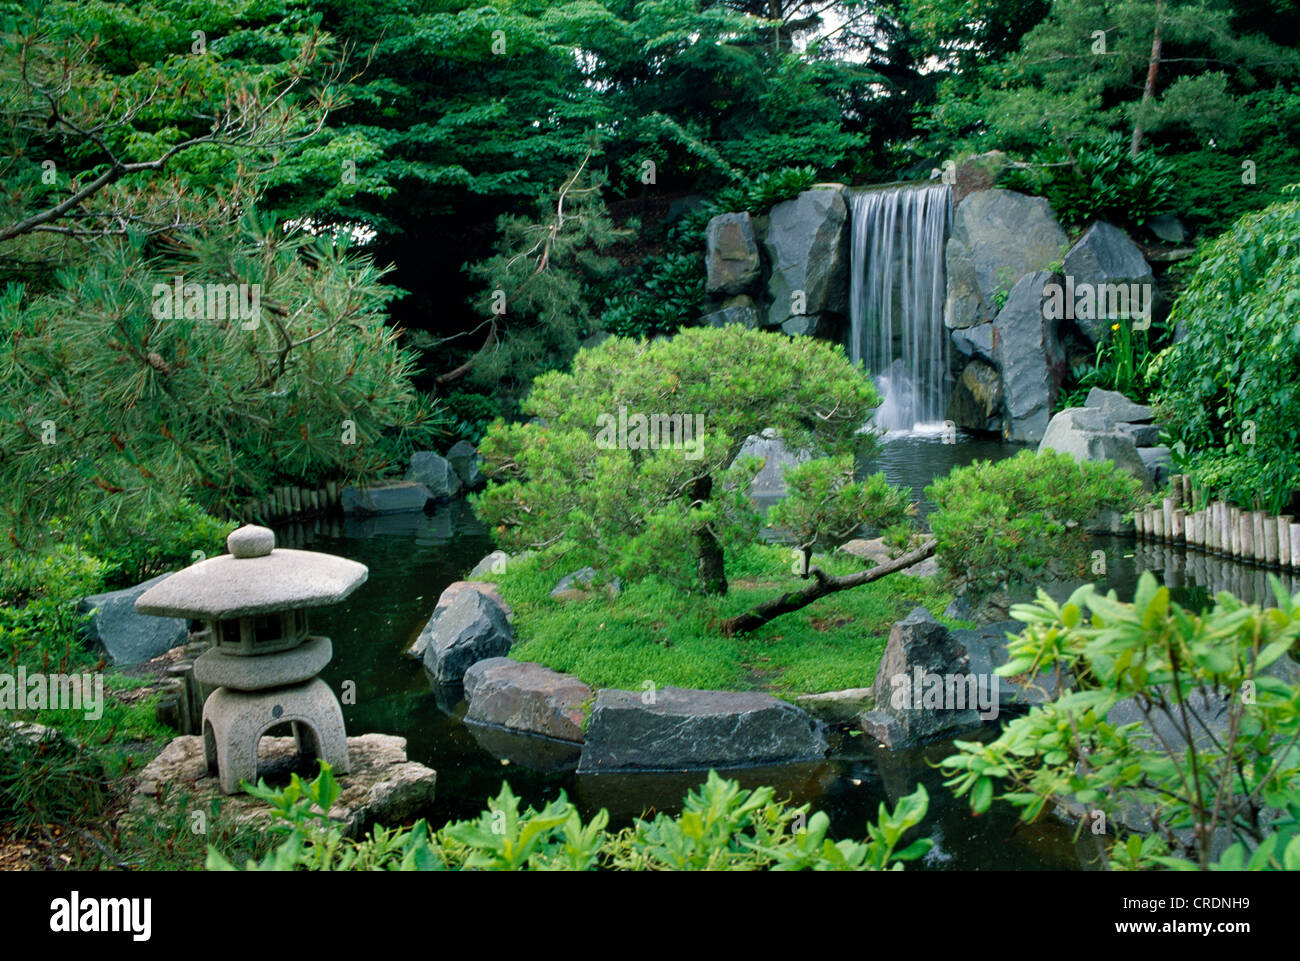 Japanese Garden The Minnesota Arboretum Stock Photo 48860149 Alamy